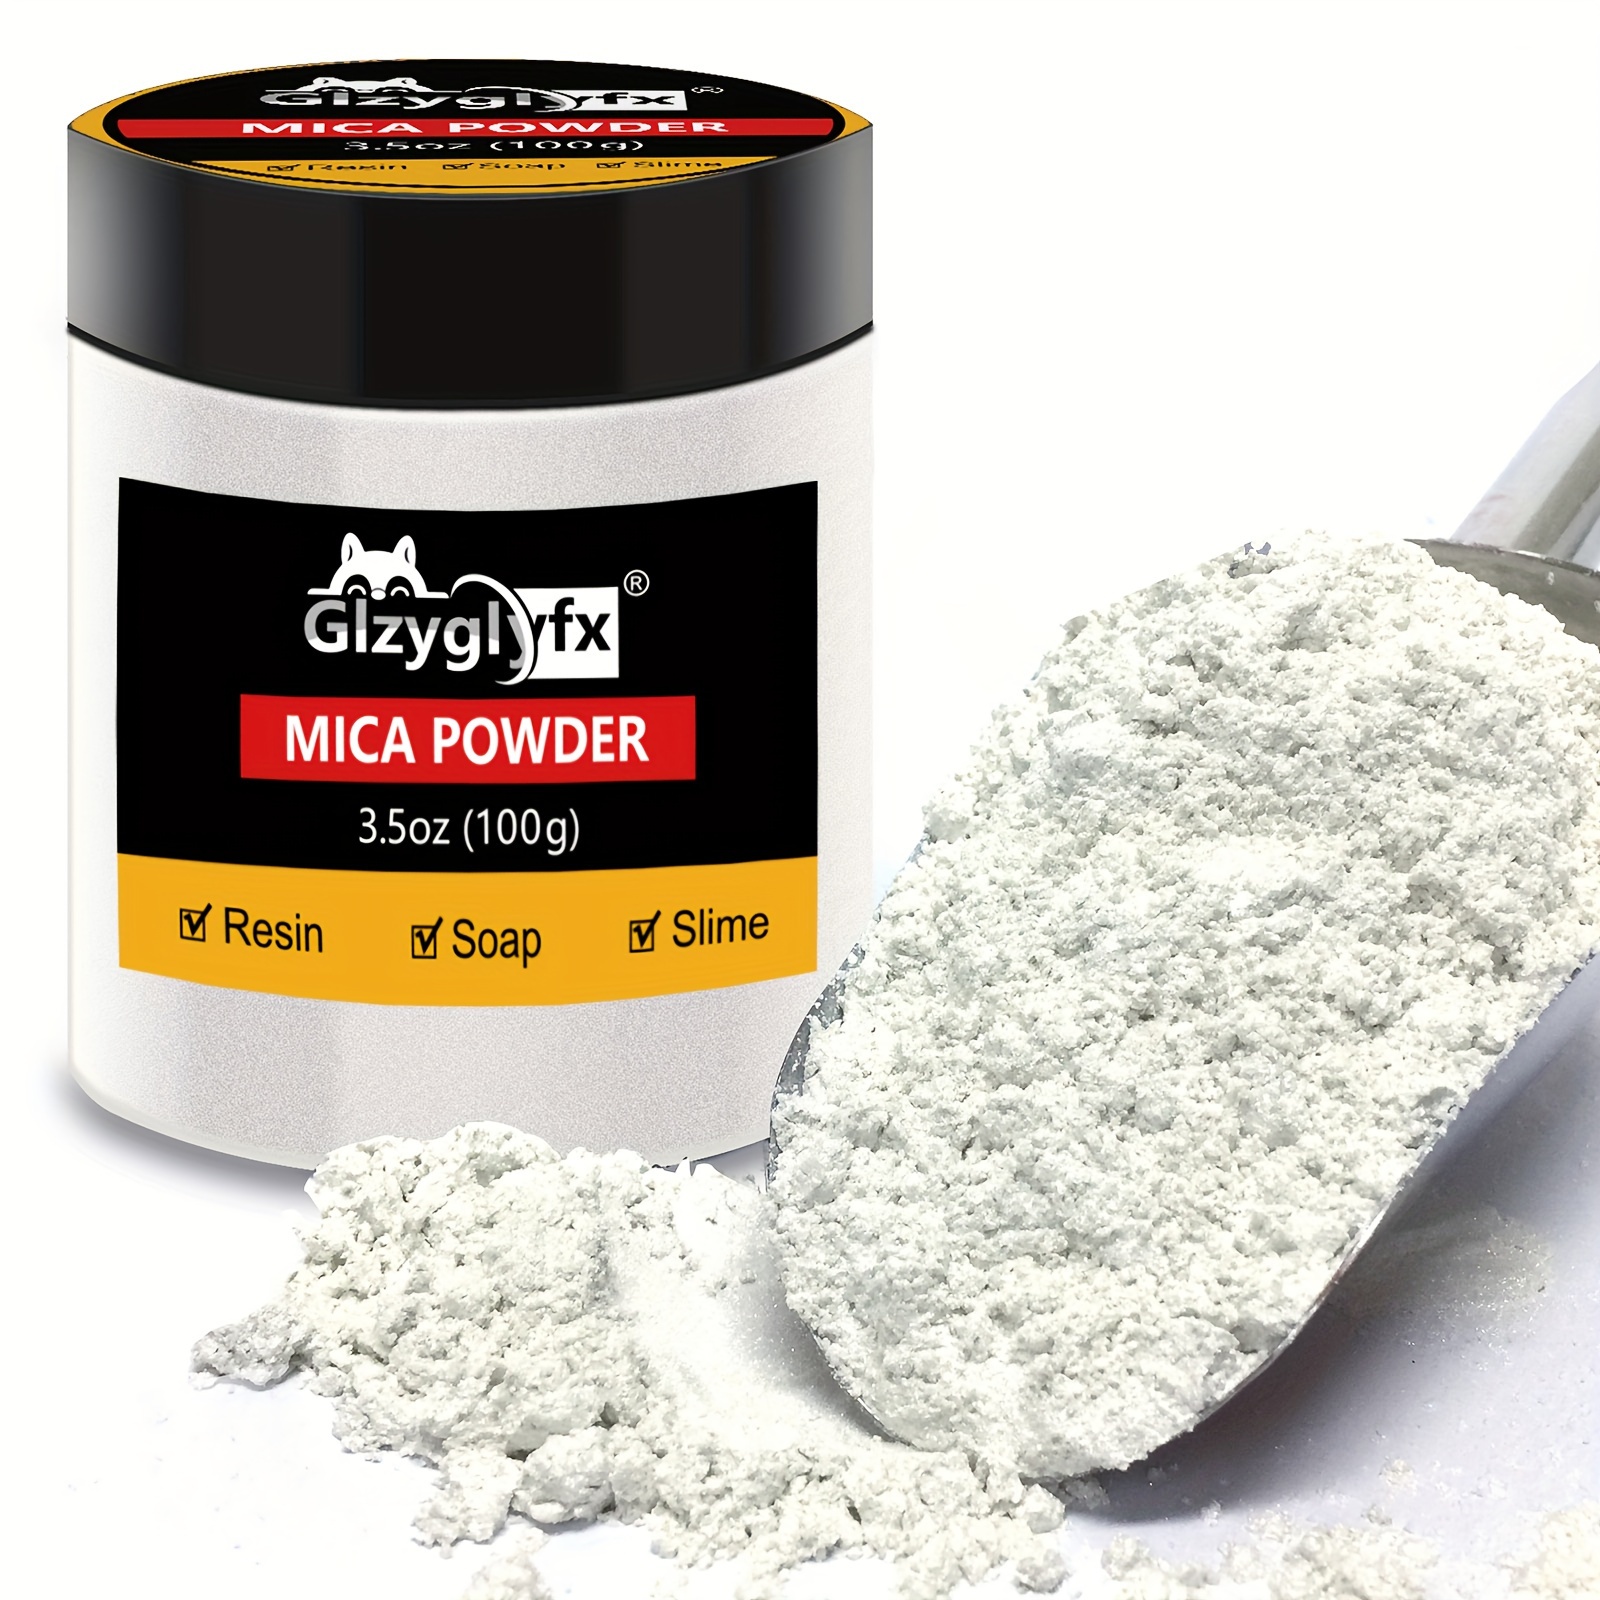 HTVRONT Gold Mica Powder for Epoxy Resin - 3.5 oz (100g) Nature